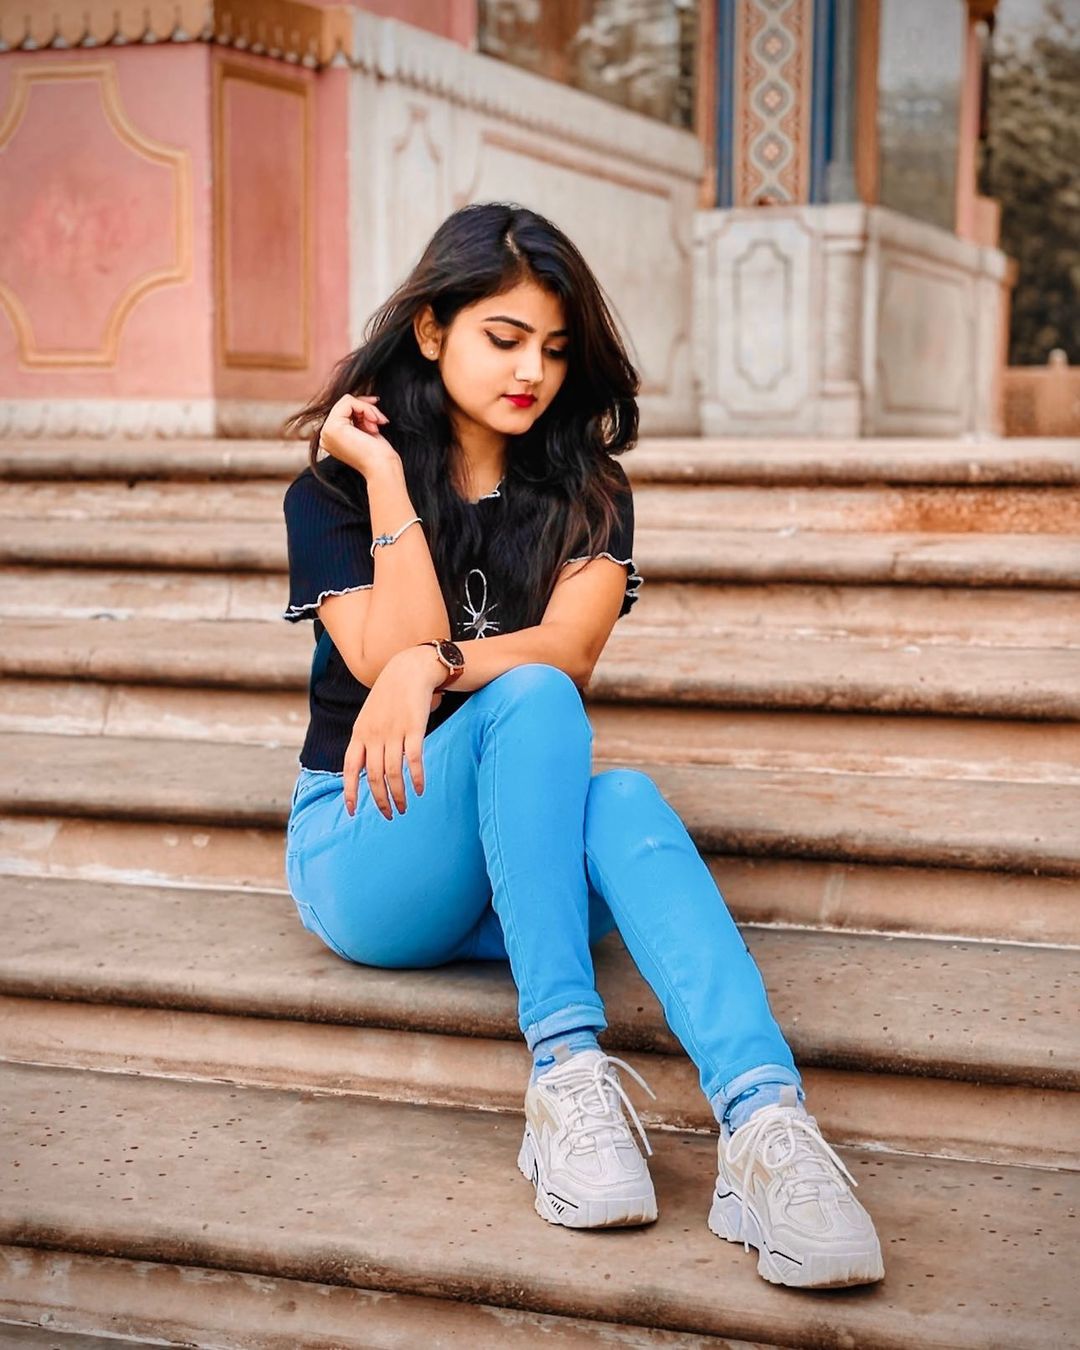 Vishali (Instagram Star) Age, Boyfriend, Career, Biography